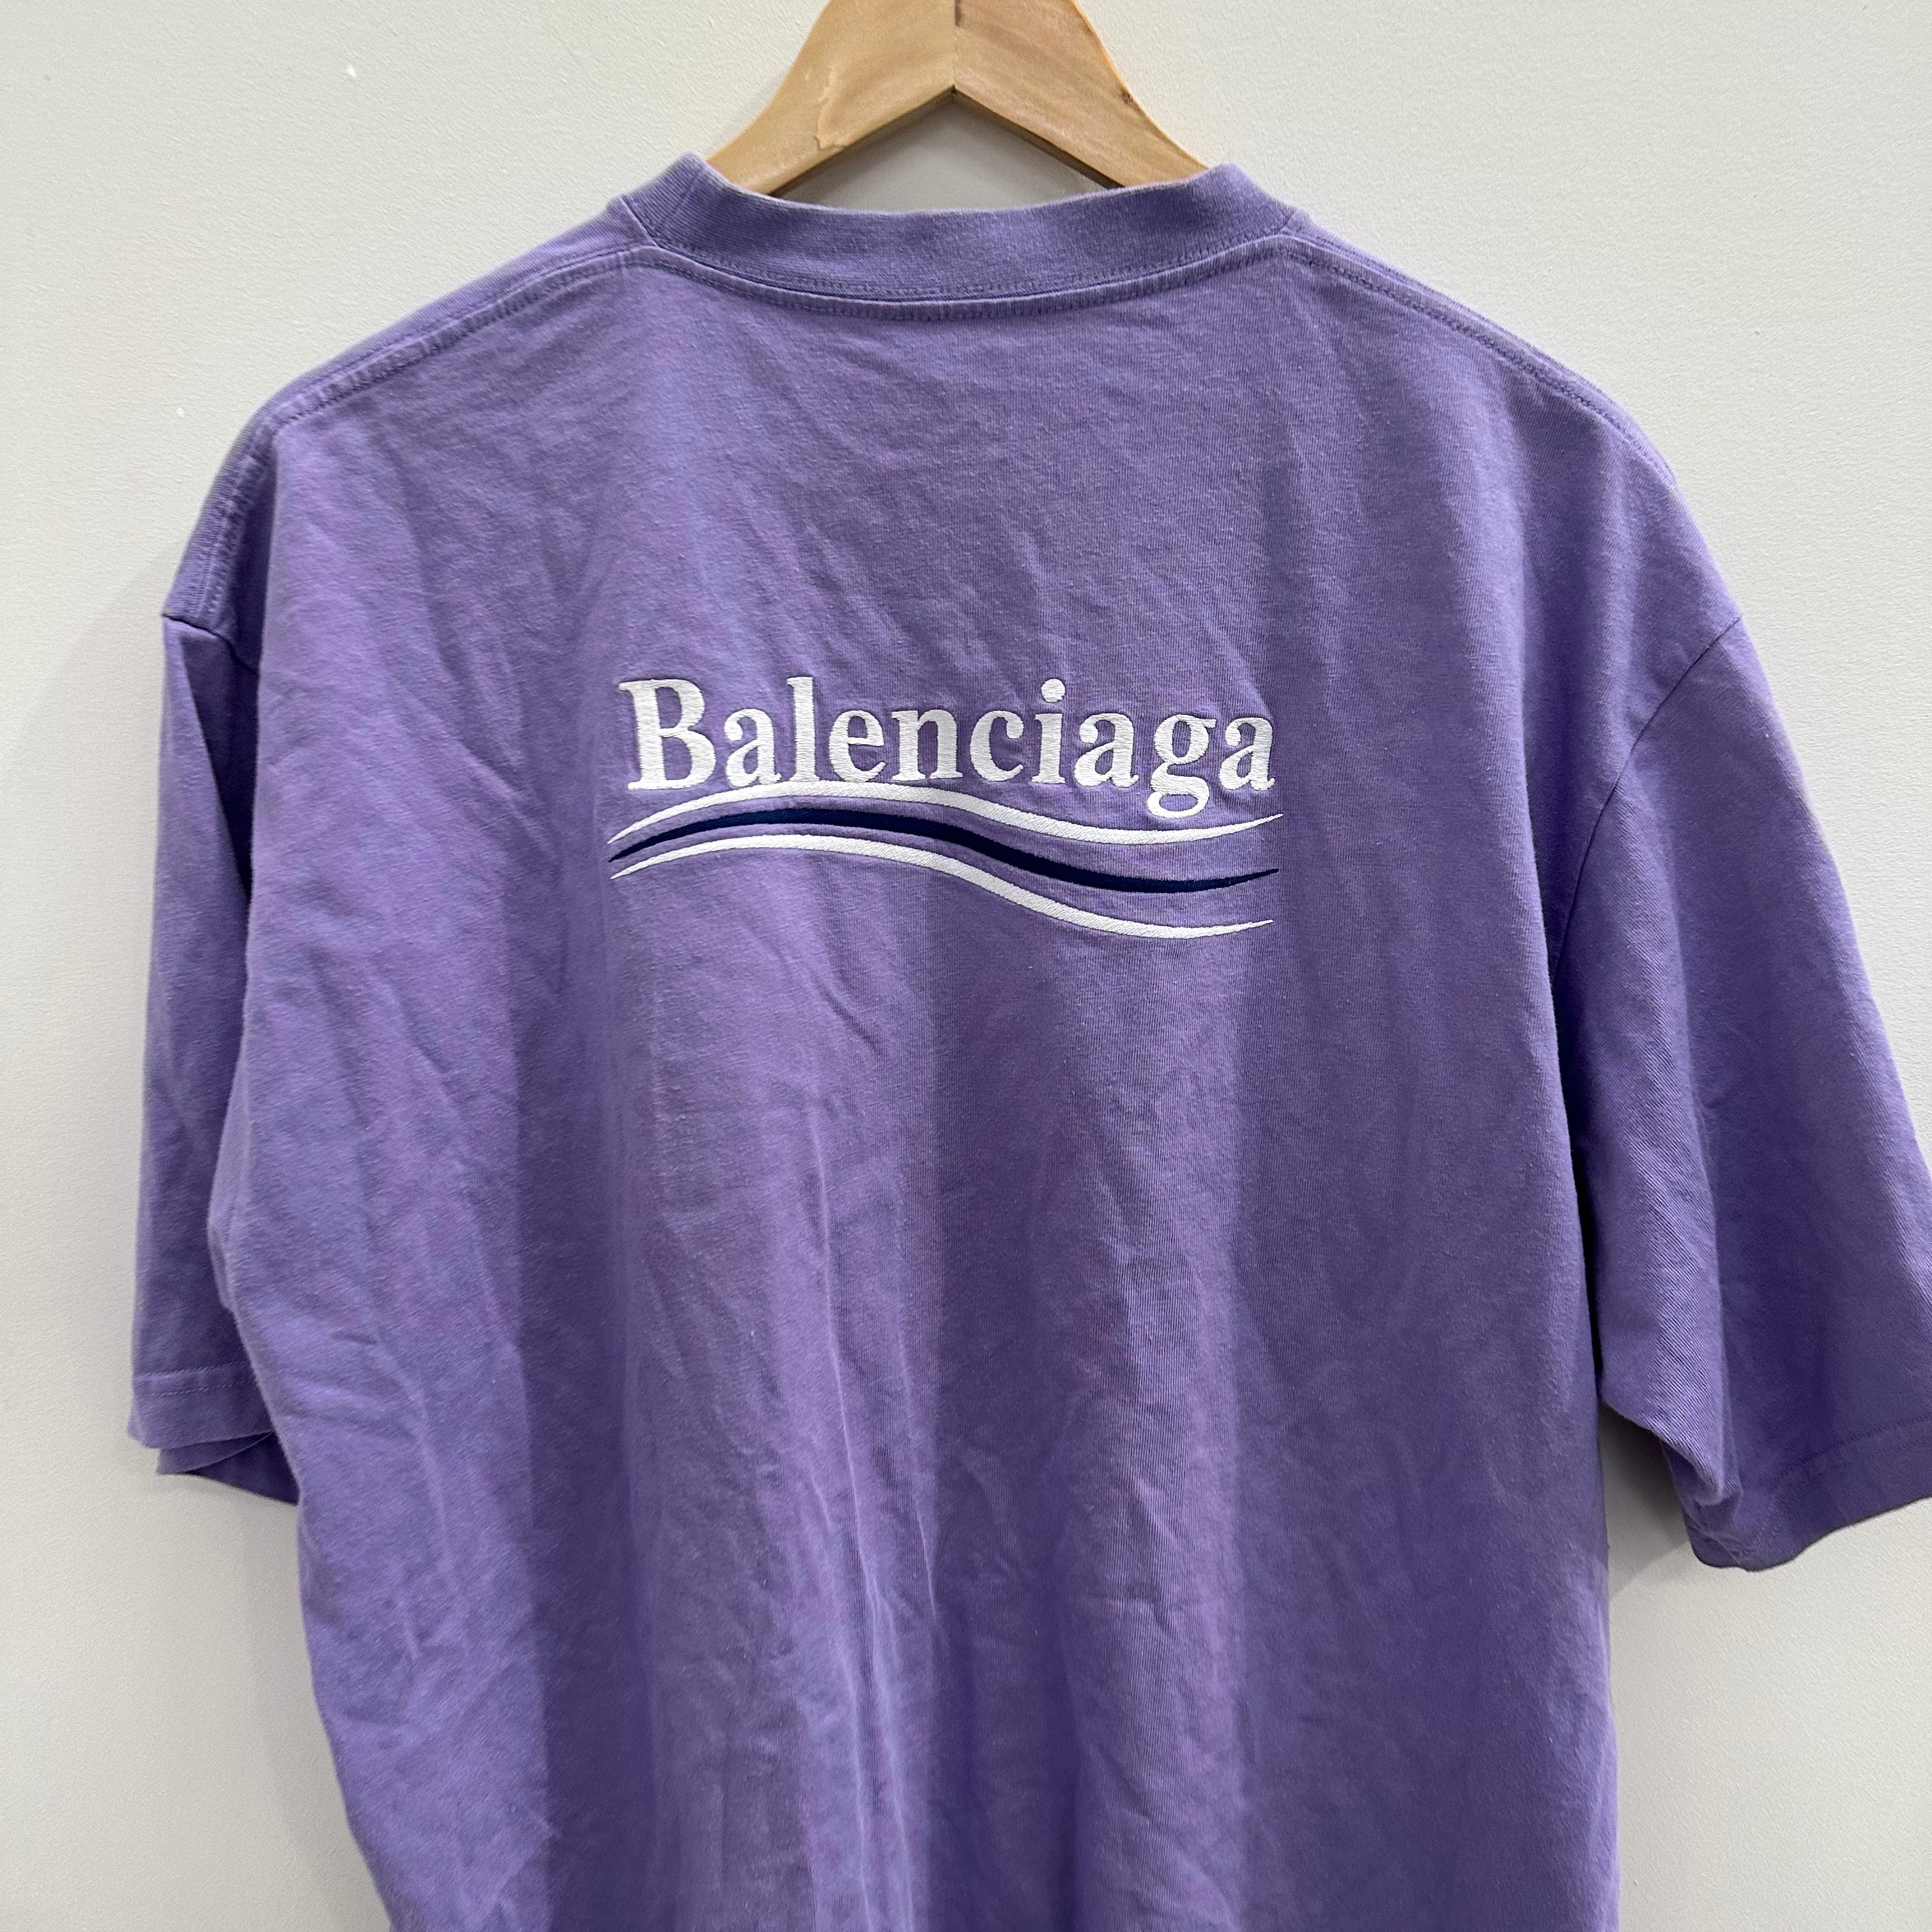 Balenciaga Purple Campaign Tee (fits L, true to size)